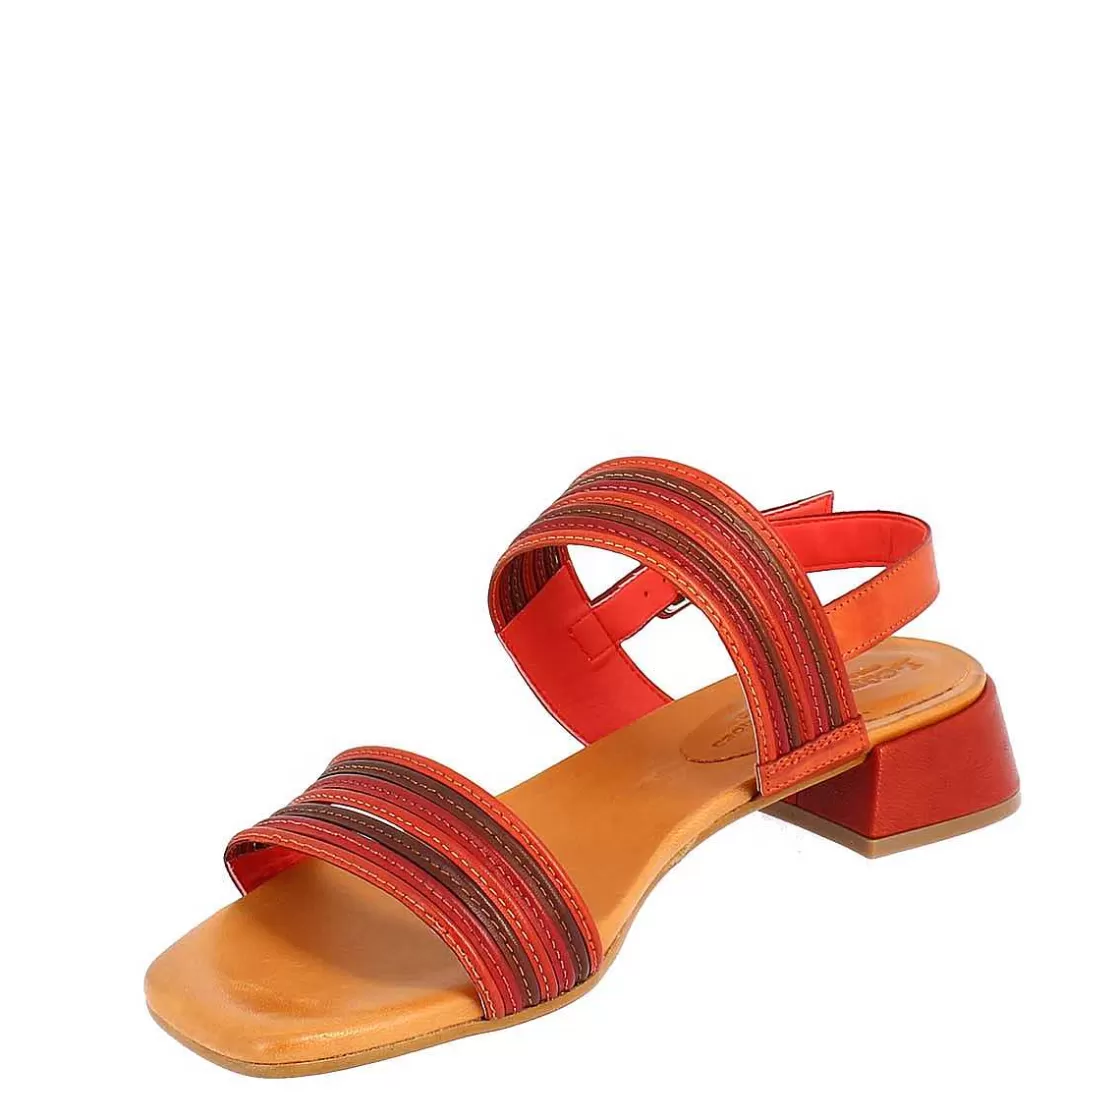 Leonardo Handmade Women'S Slingback Sandals In Red, Orange And Cognac Leather. Store